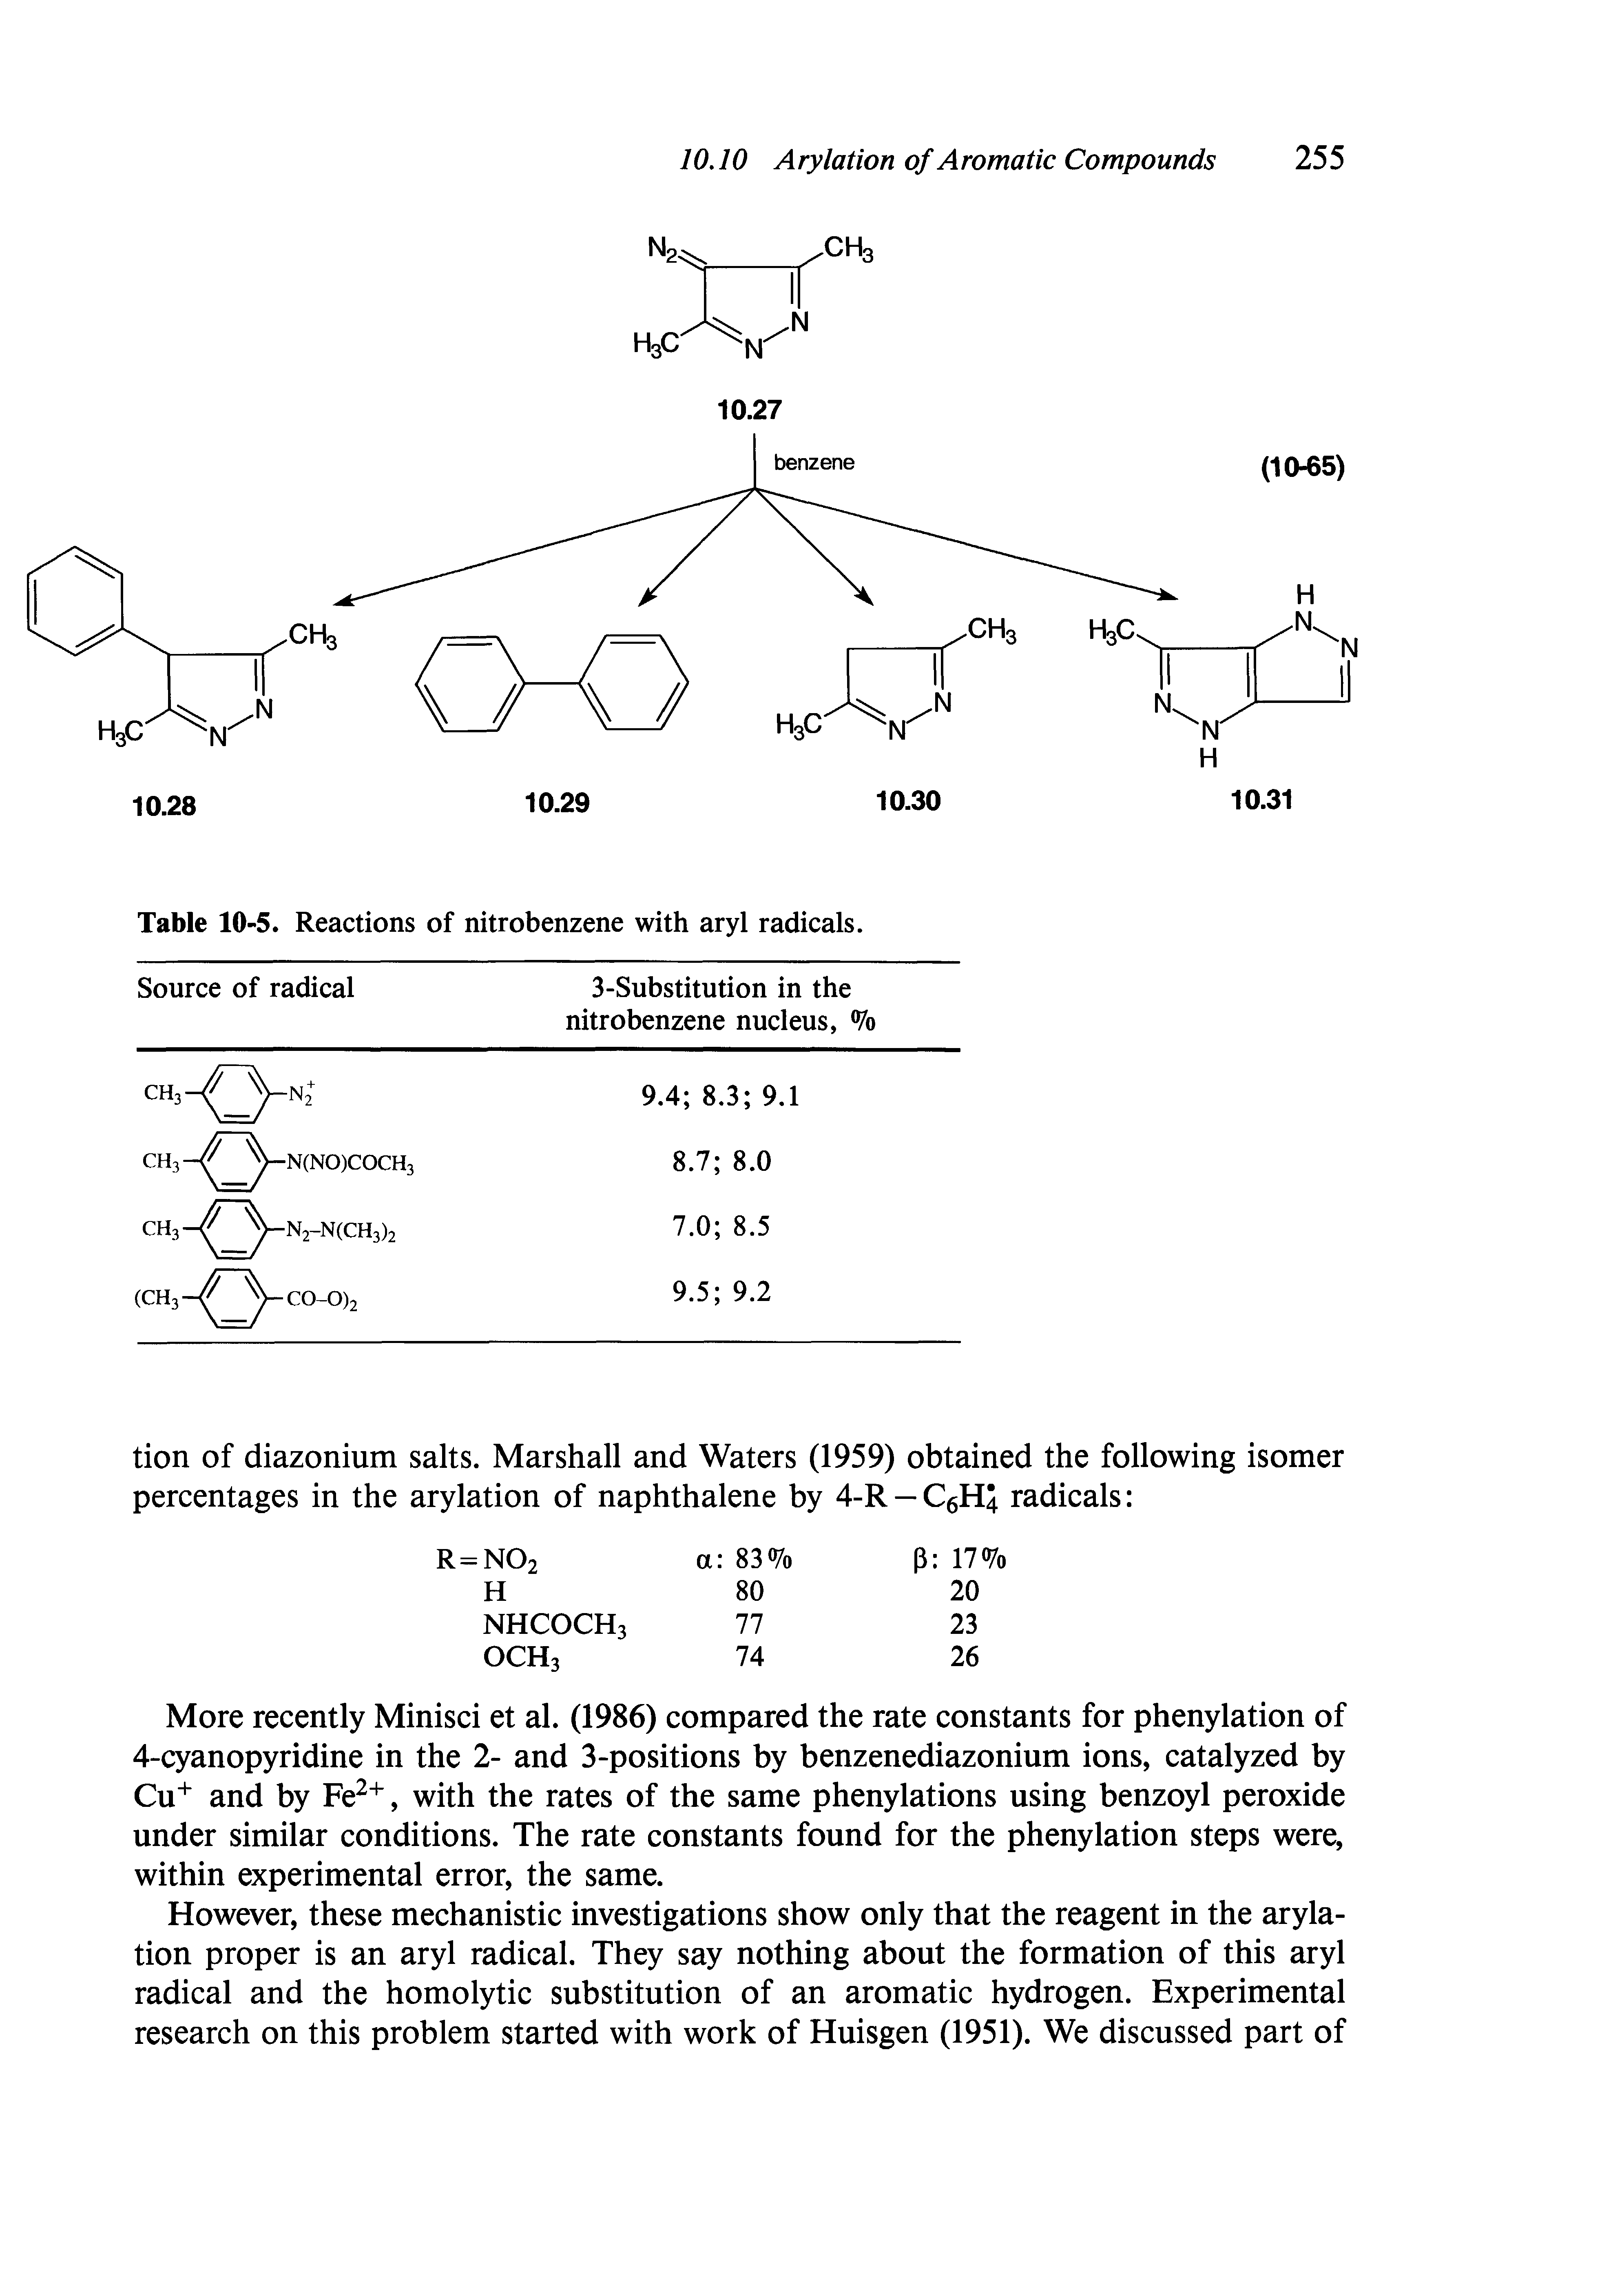 Table 10-5. Reactions of nitrobenzene with aryl radicals.